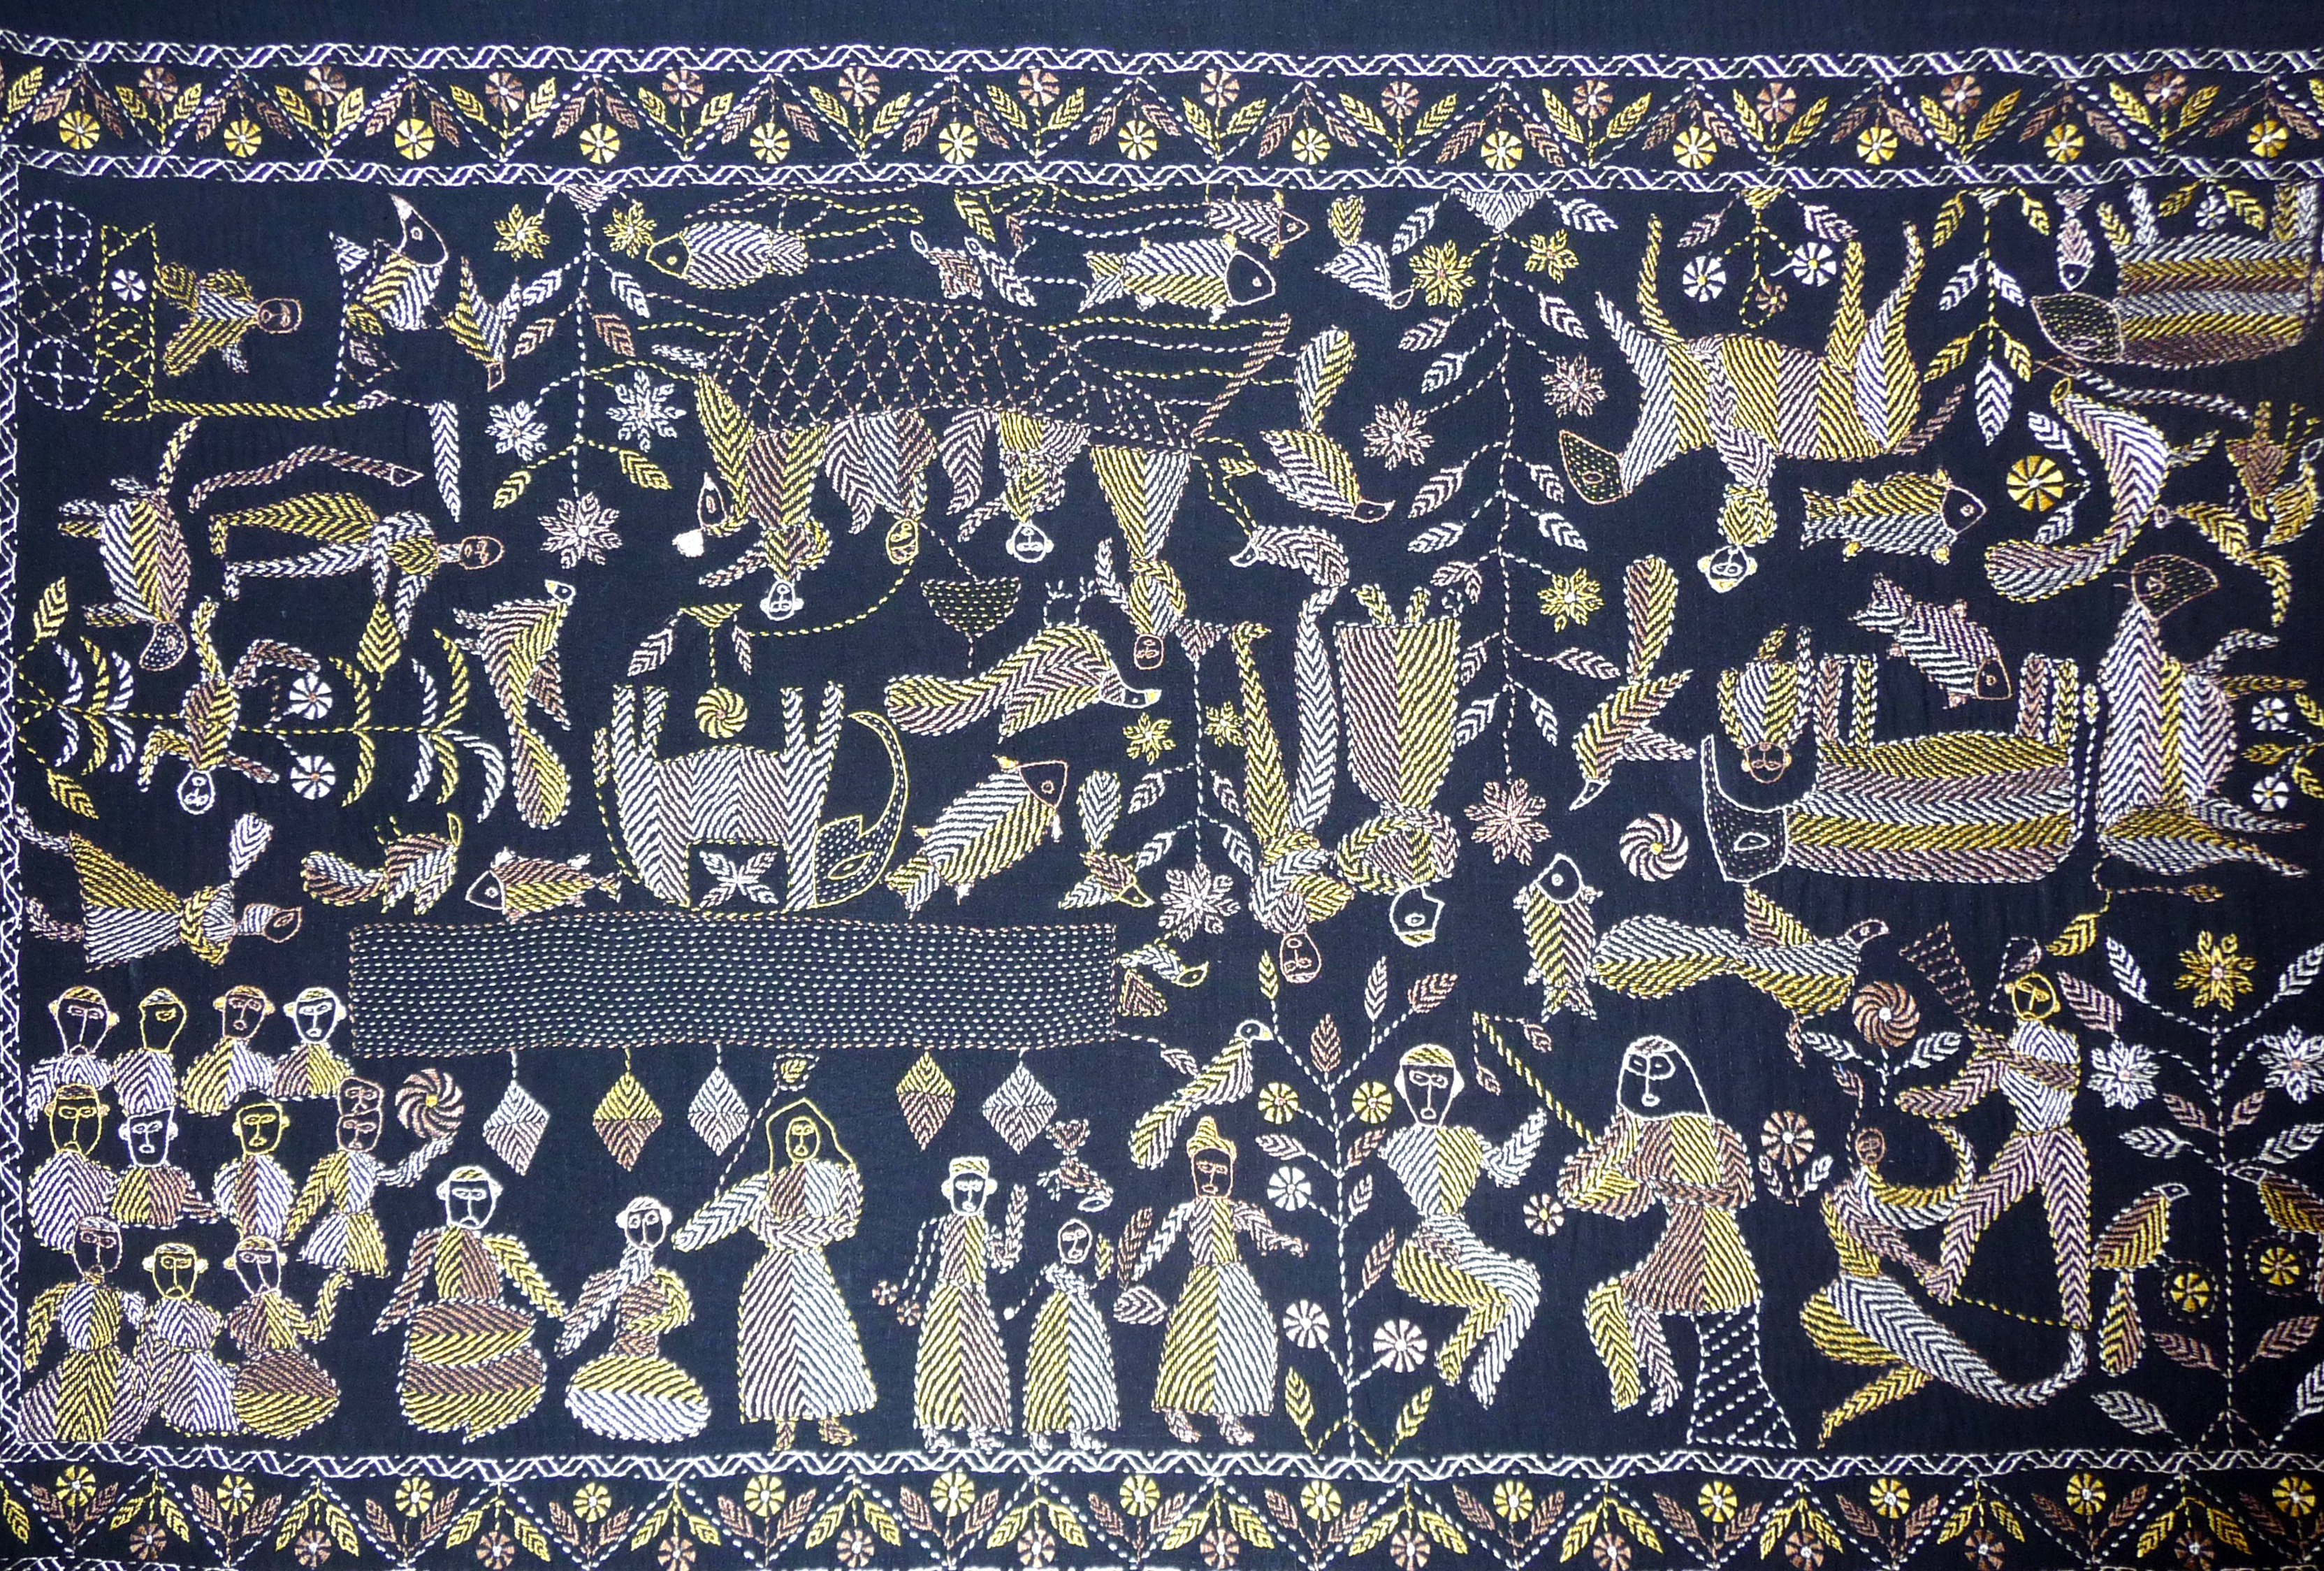 kantha embroidery made in Sreepur, Bangladesh